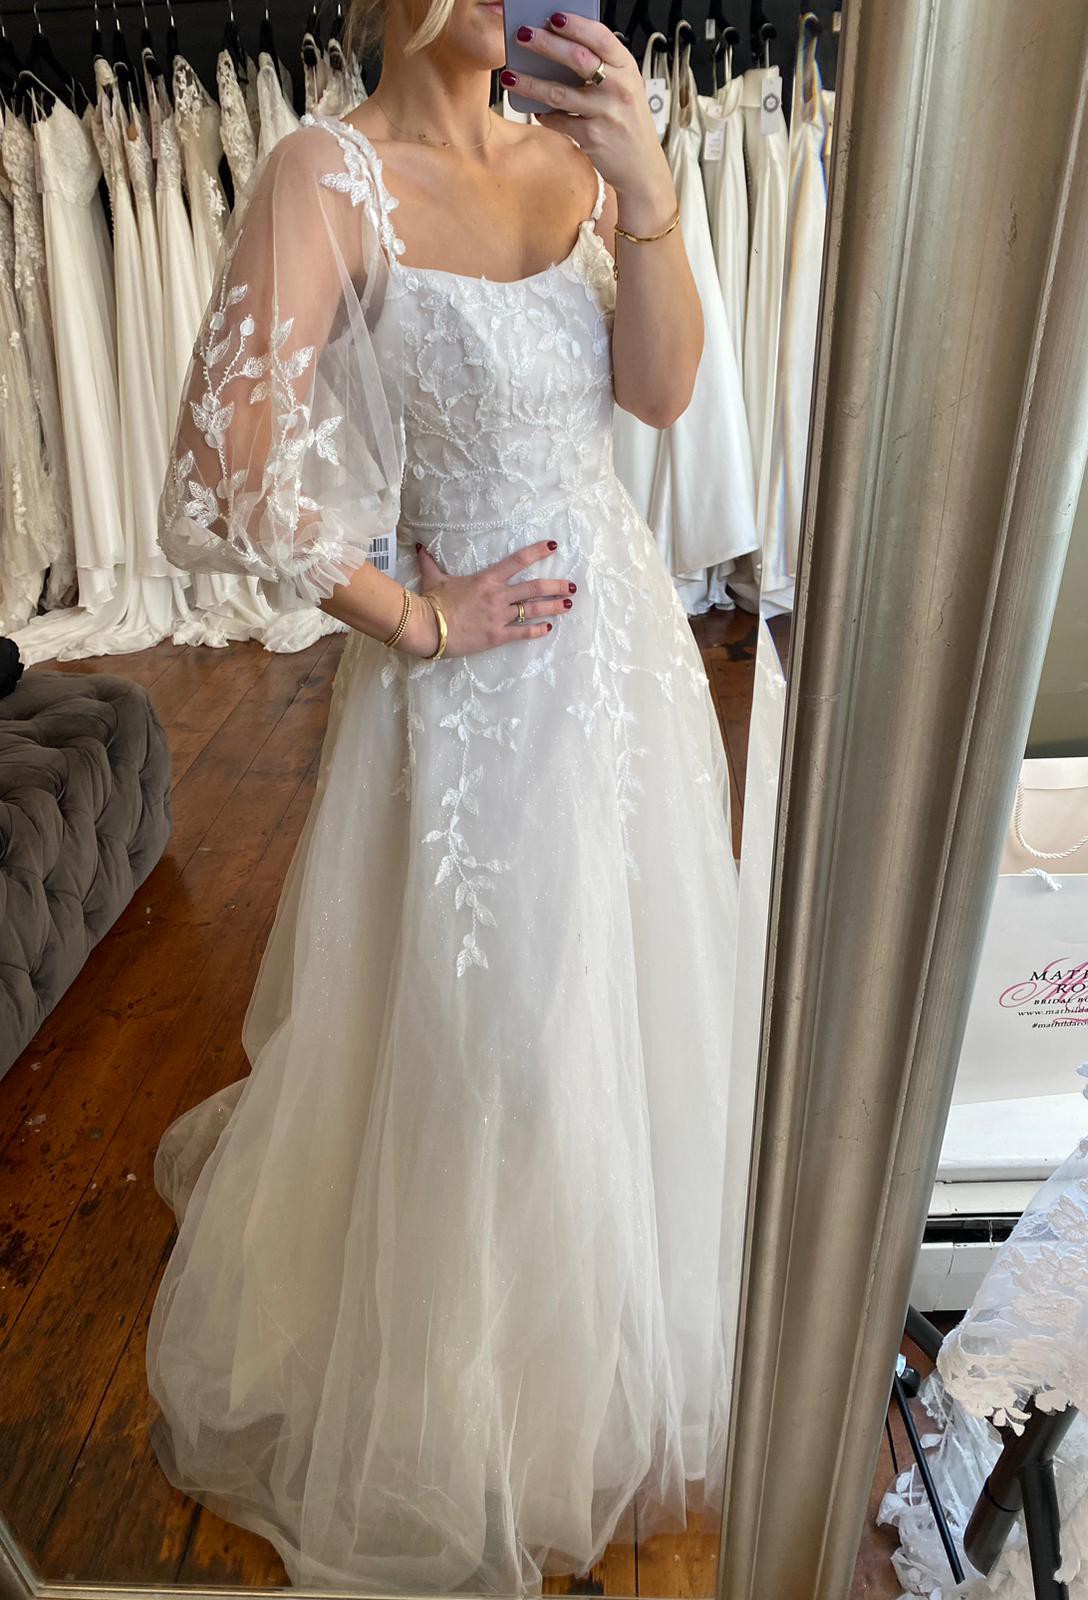 Maggie Sottero LOUISA Sample Wedding Dress Save 74% - Stillwhite